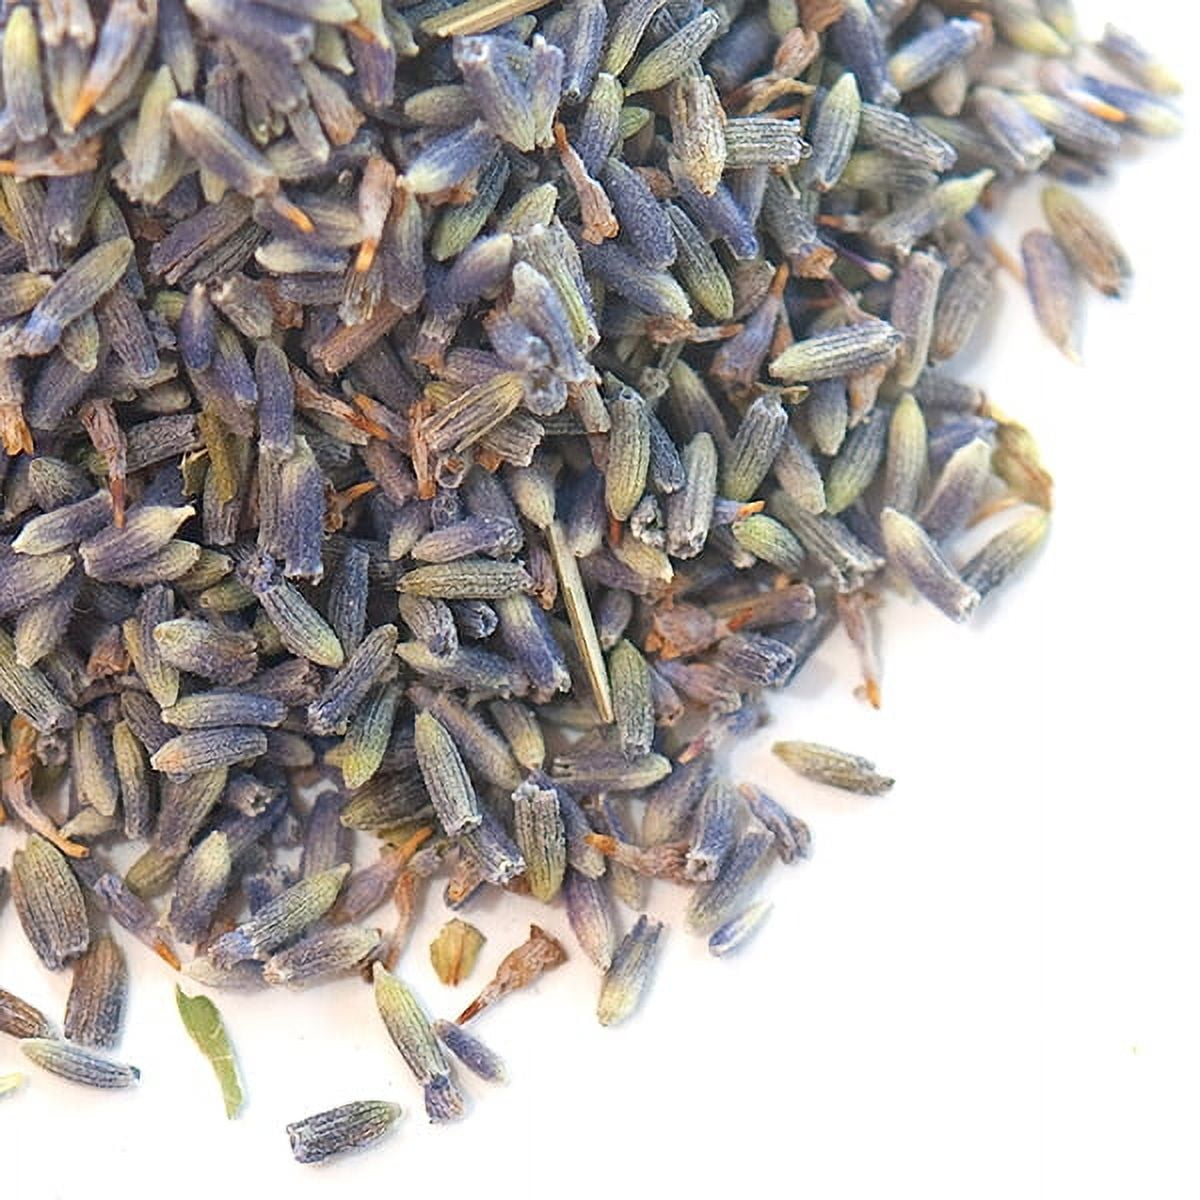 Culinary Lavender Buds — .